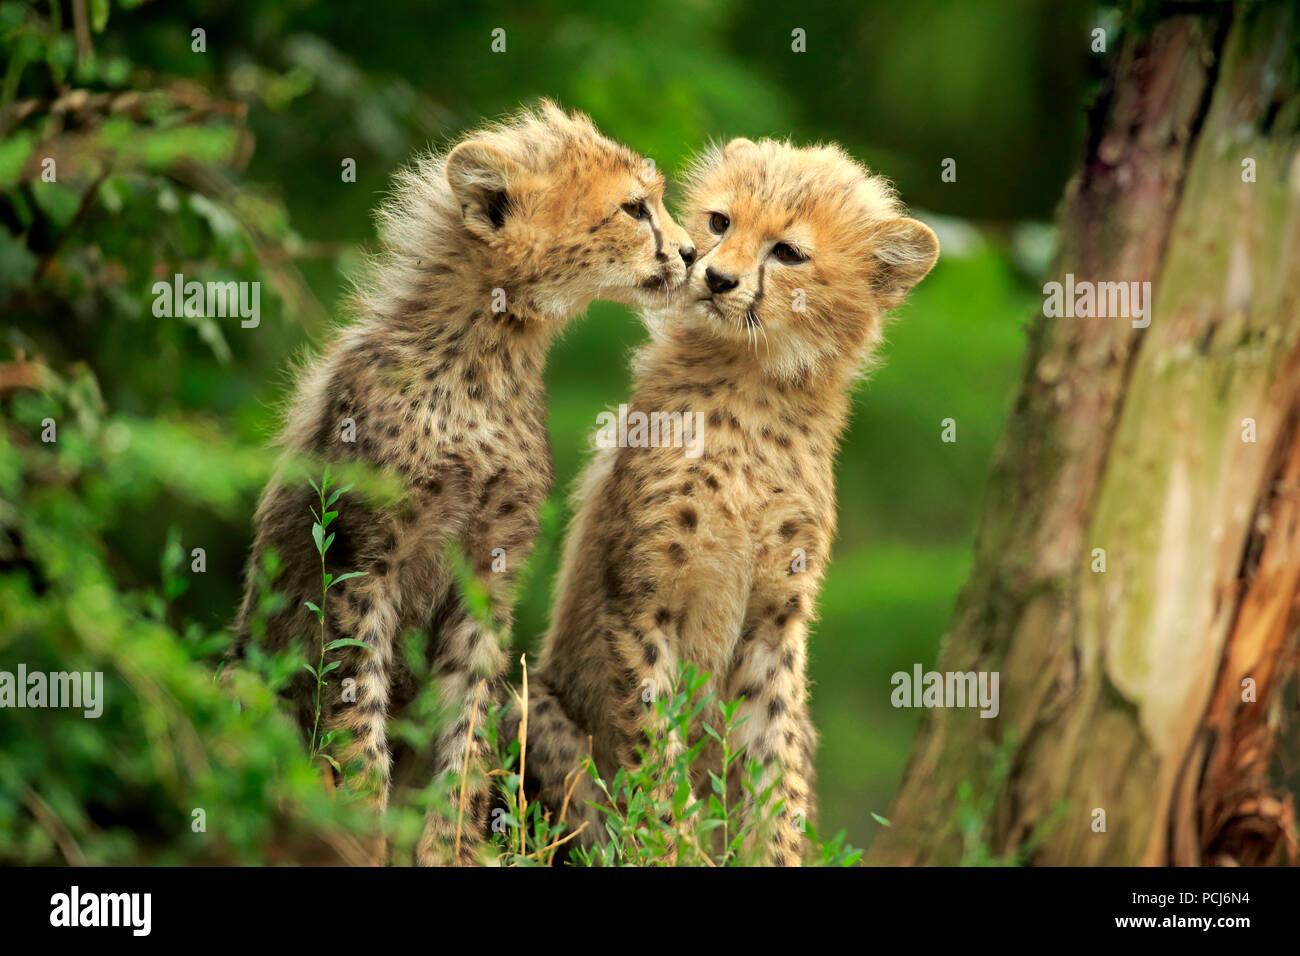 Sudan Cheetah, giovani fratelli, dieci settimane, a nord-est Africa, Africa (Acinonyx jubatus soemmeringii) Foto Stock